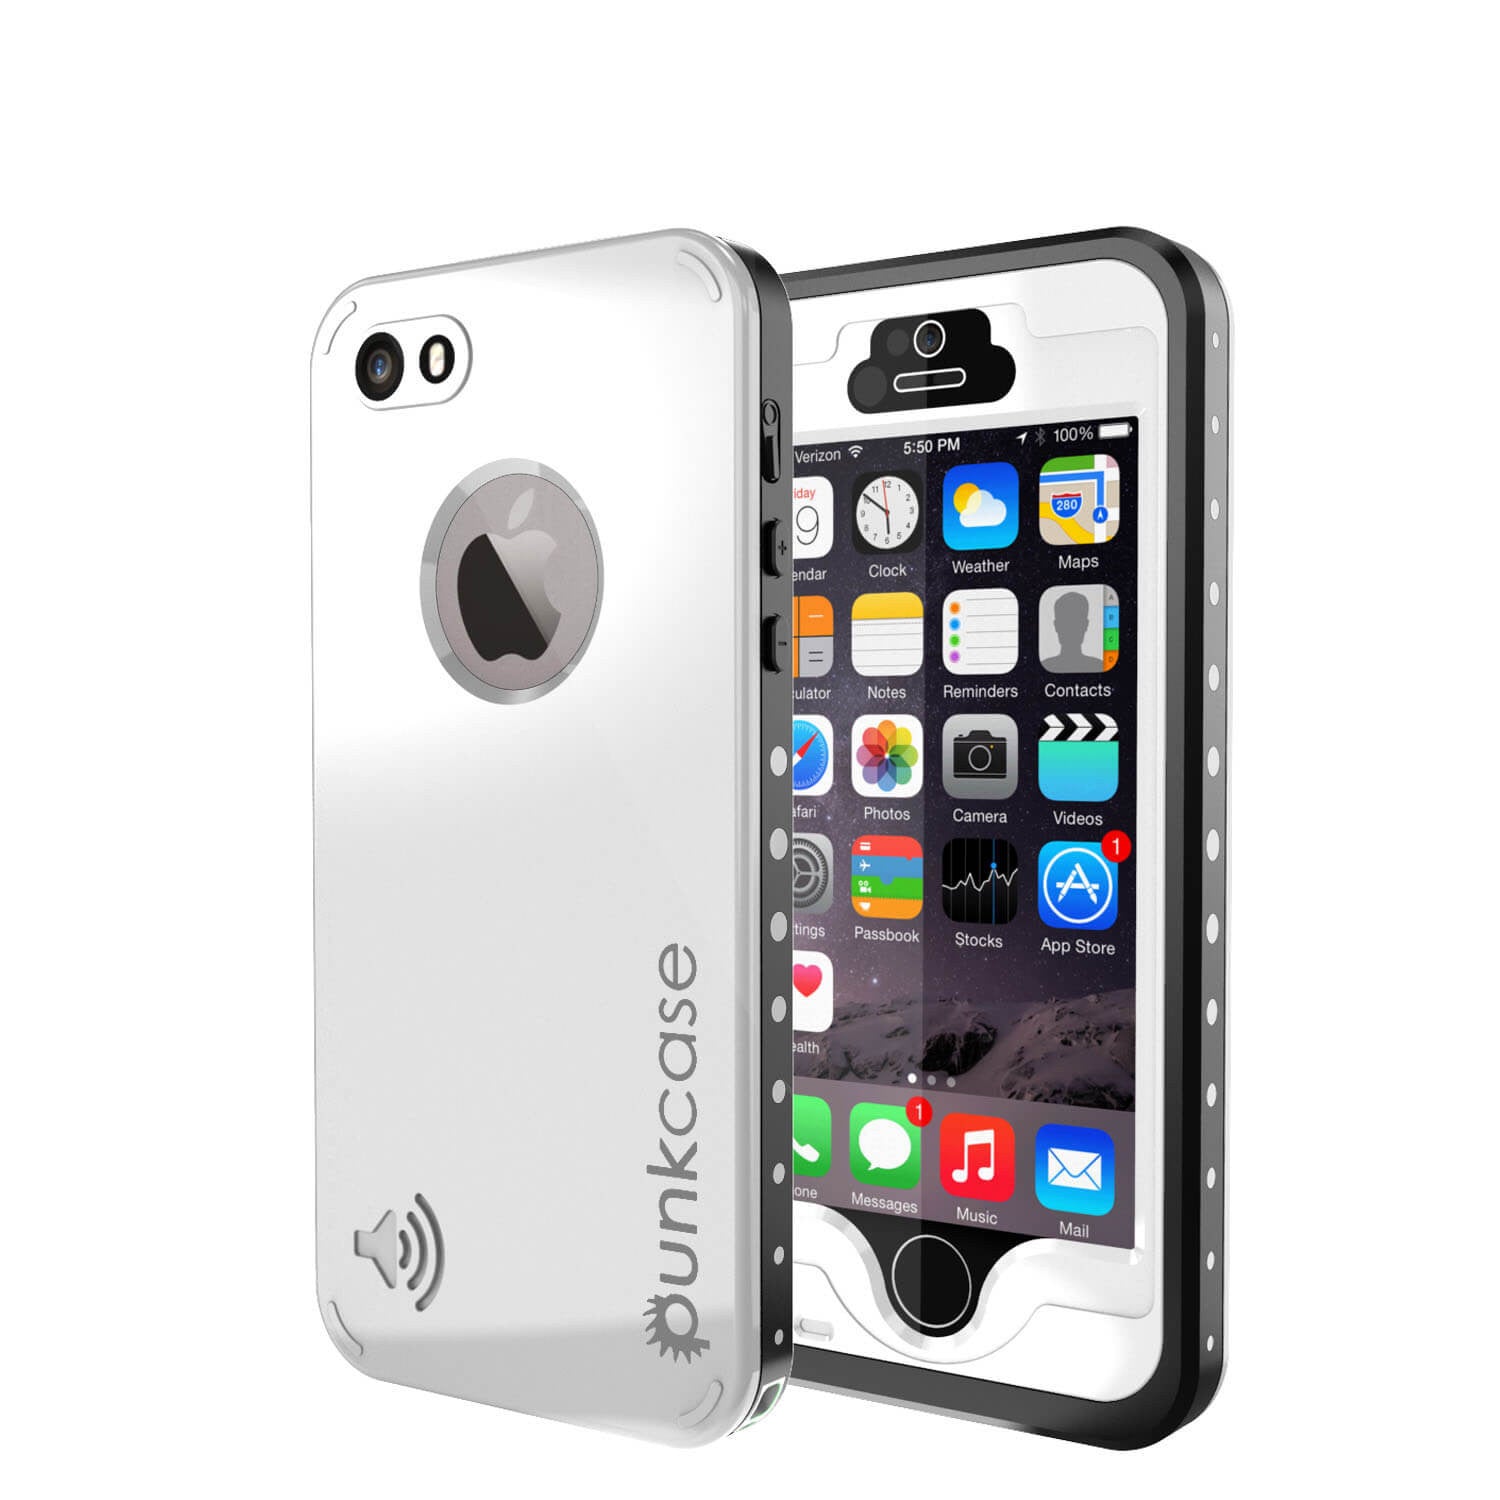 iPhone 5S/5 Waterproof Case, PunkCase StudStar White Case Water/Shock/Dirt Proof | Lifetime Warranty (Color in image: white)